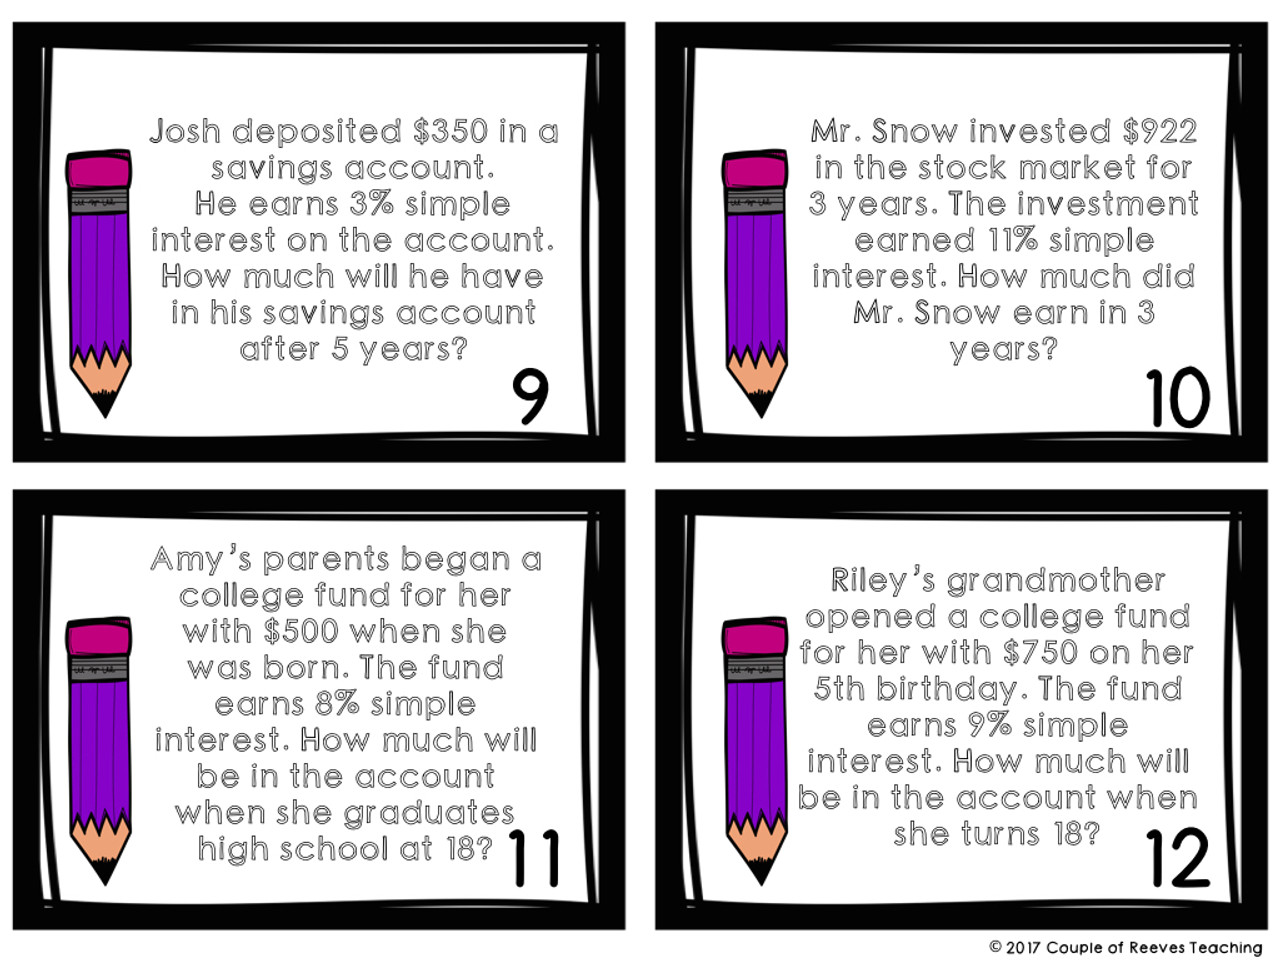 lesson 8 homework practice financial literacy simple interest